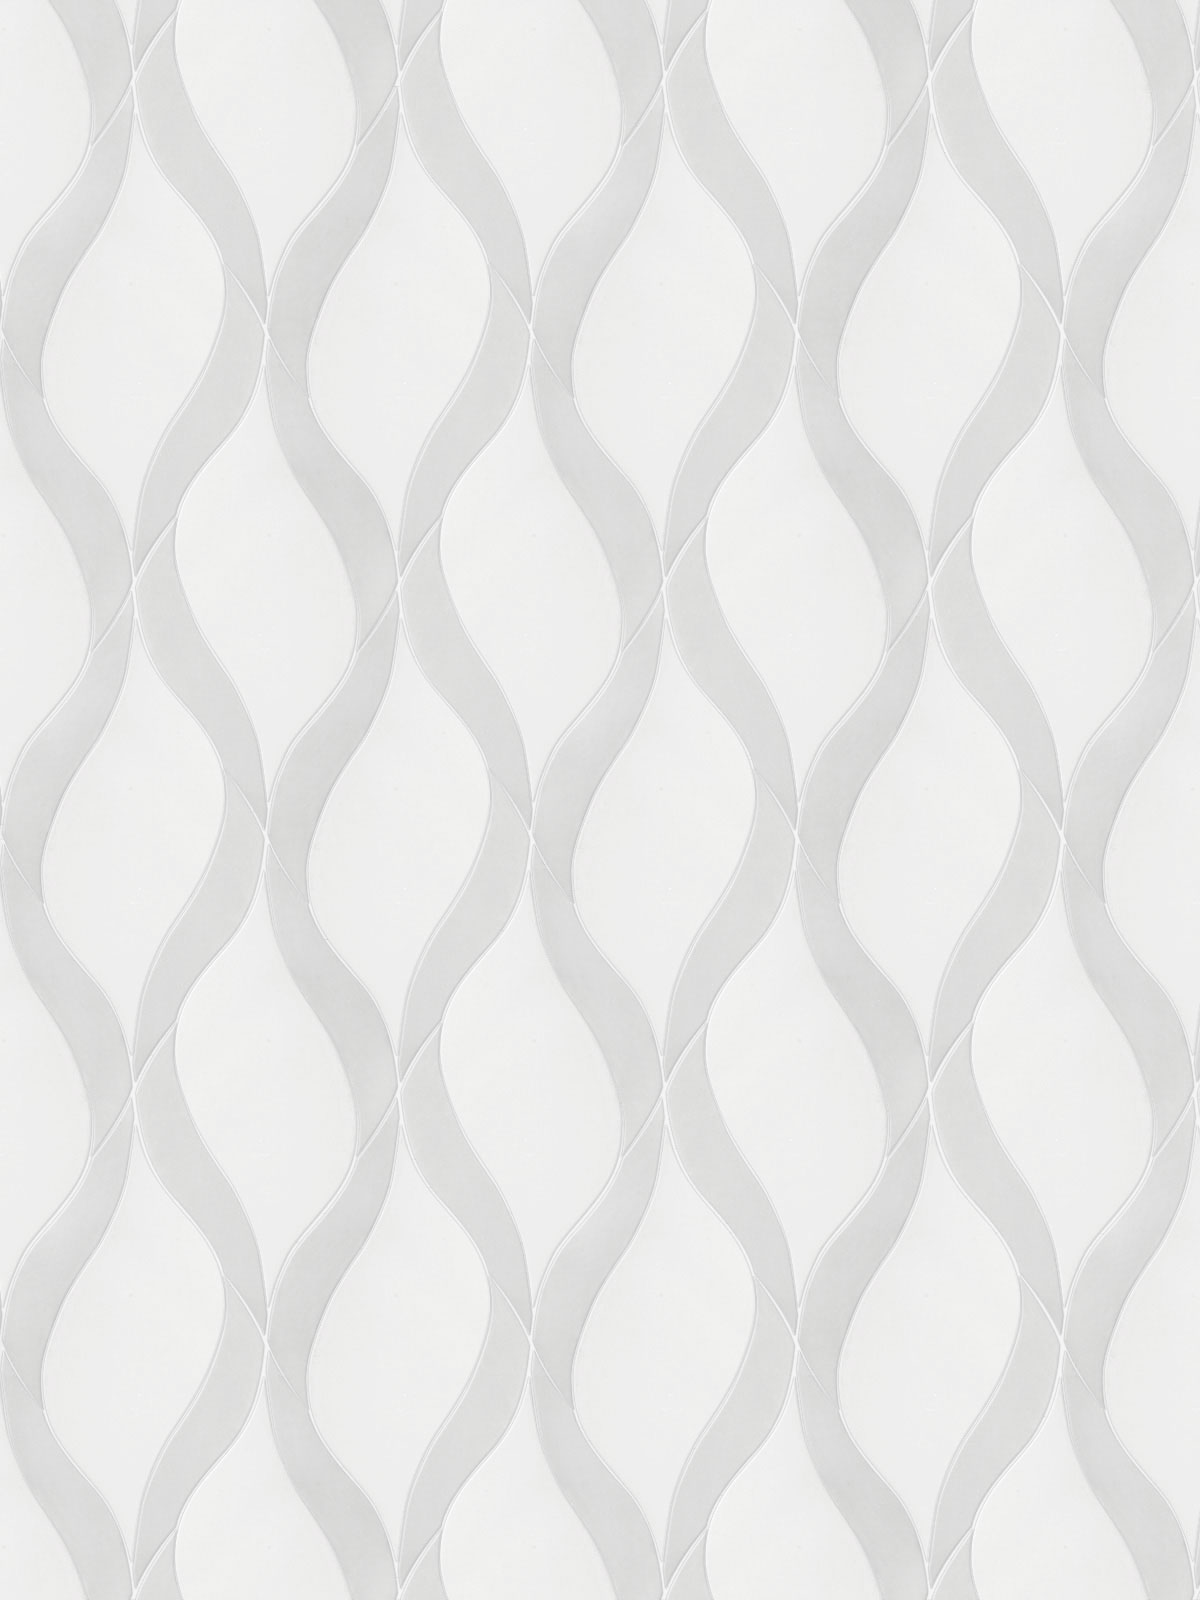 White Gray Waterjet Luxury Mosaic Backsplash Tile BA7006 17